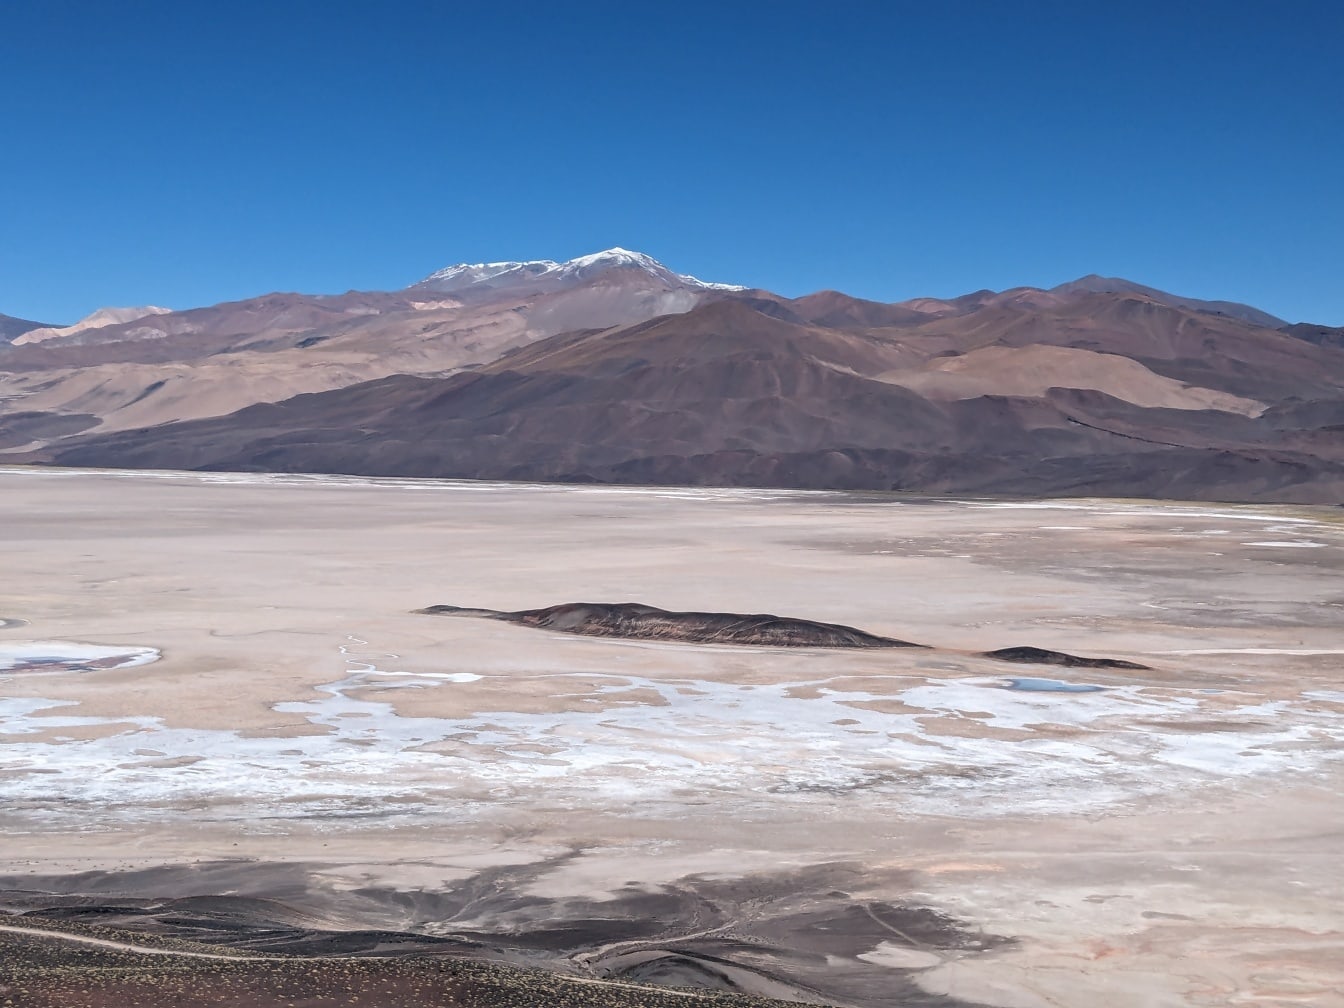 Large salt flat landscape at desert plateau in the Salar de Antofalla